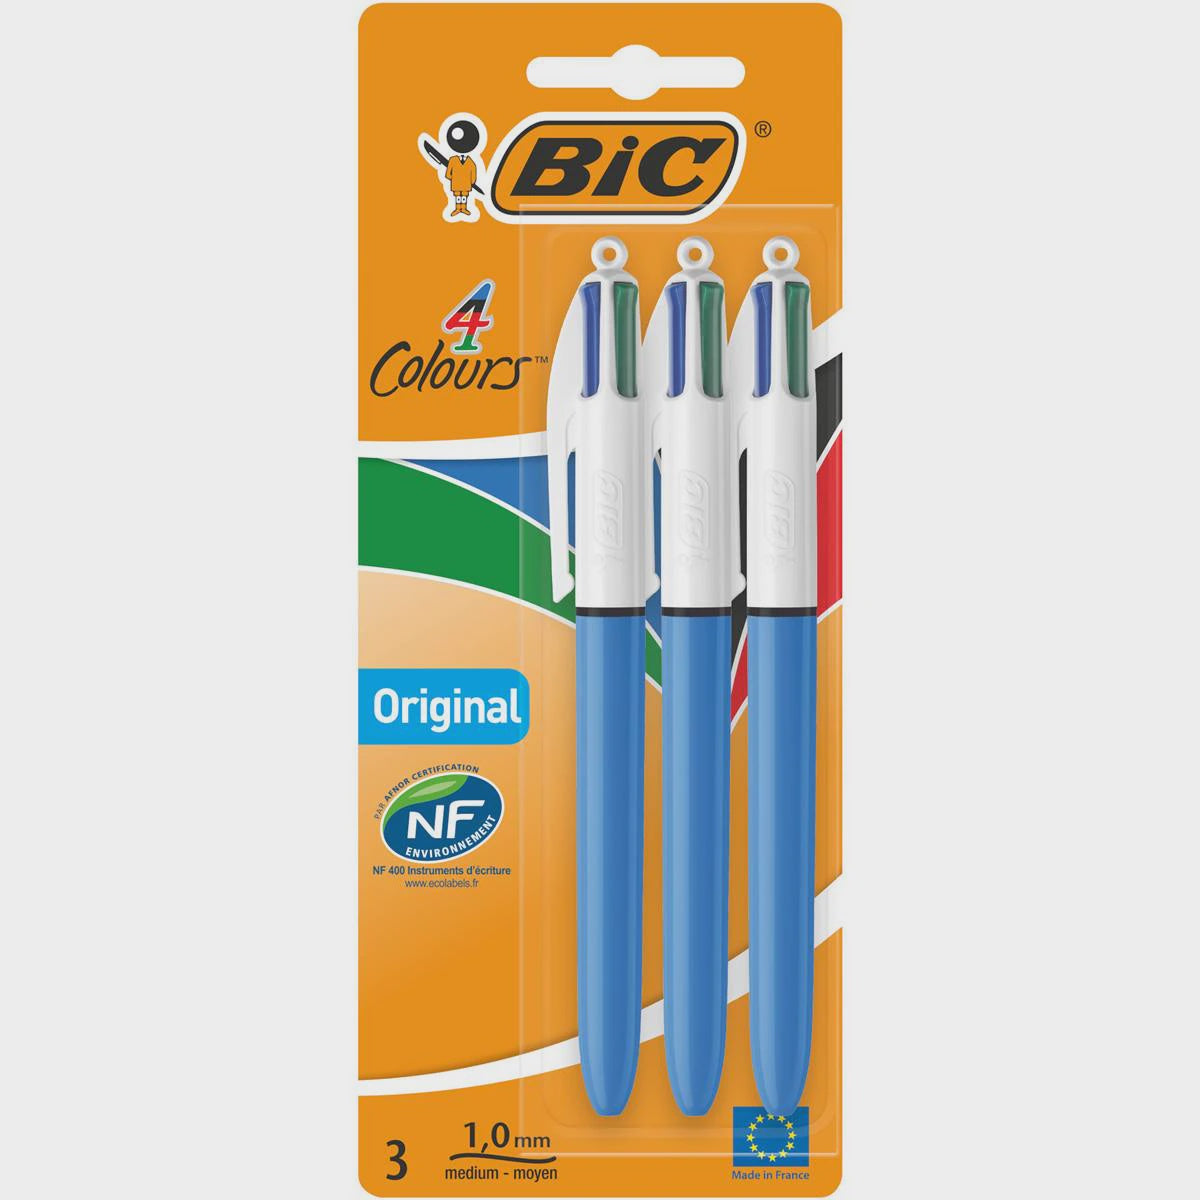 Bic 4 Colour Pen 3pk